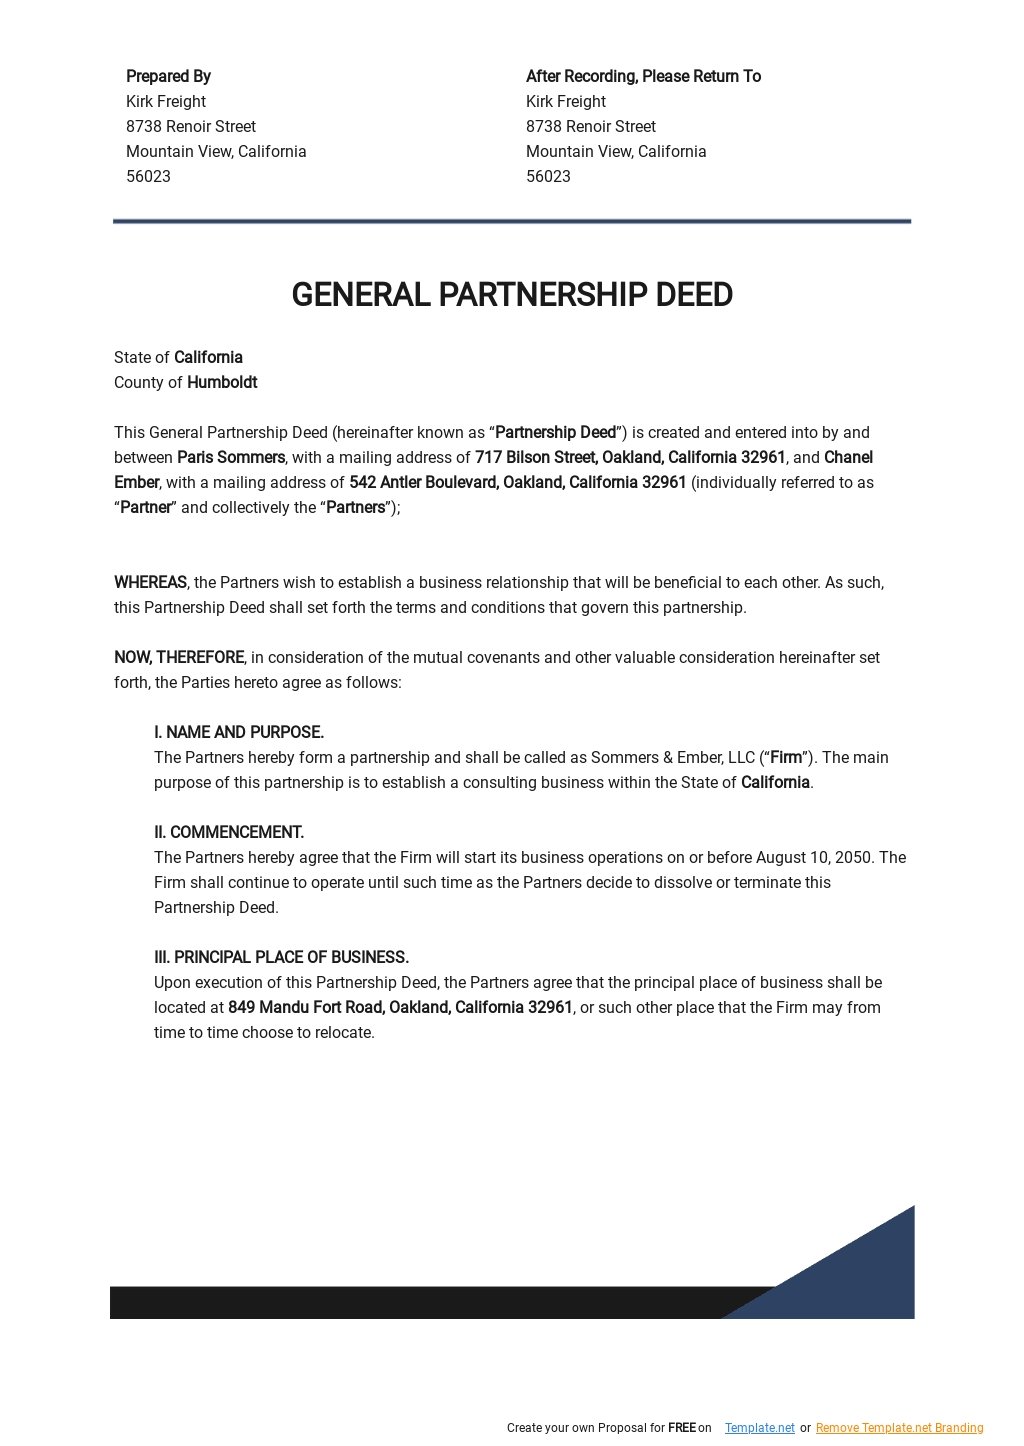 General Partnership Deed Template